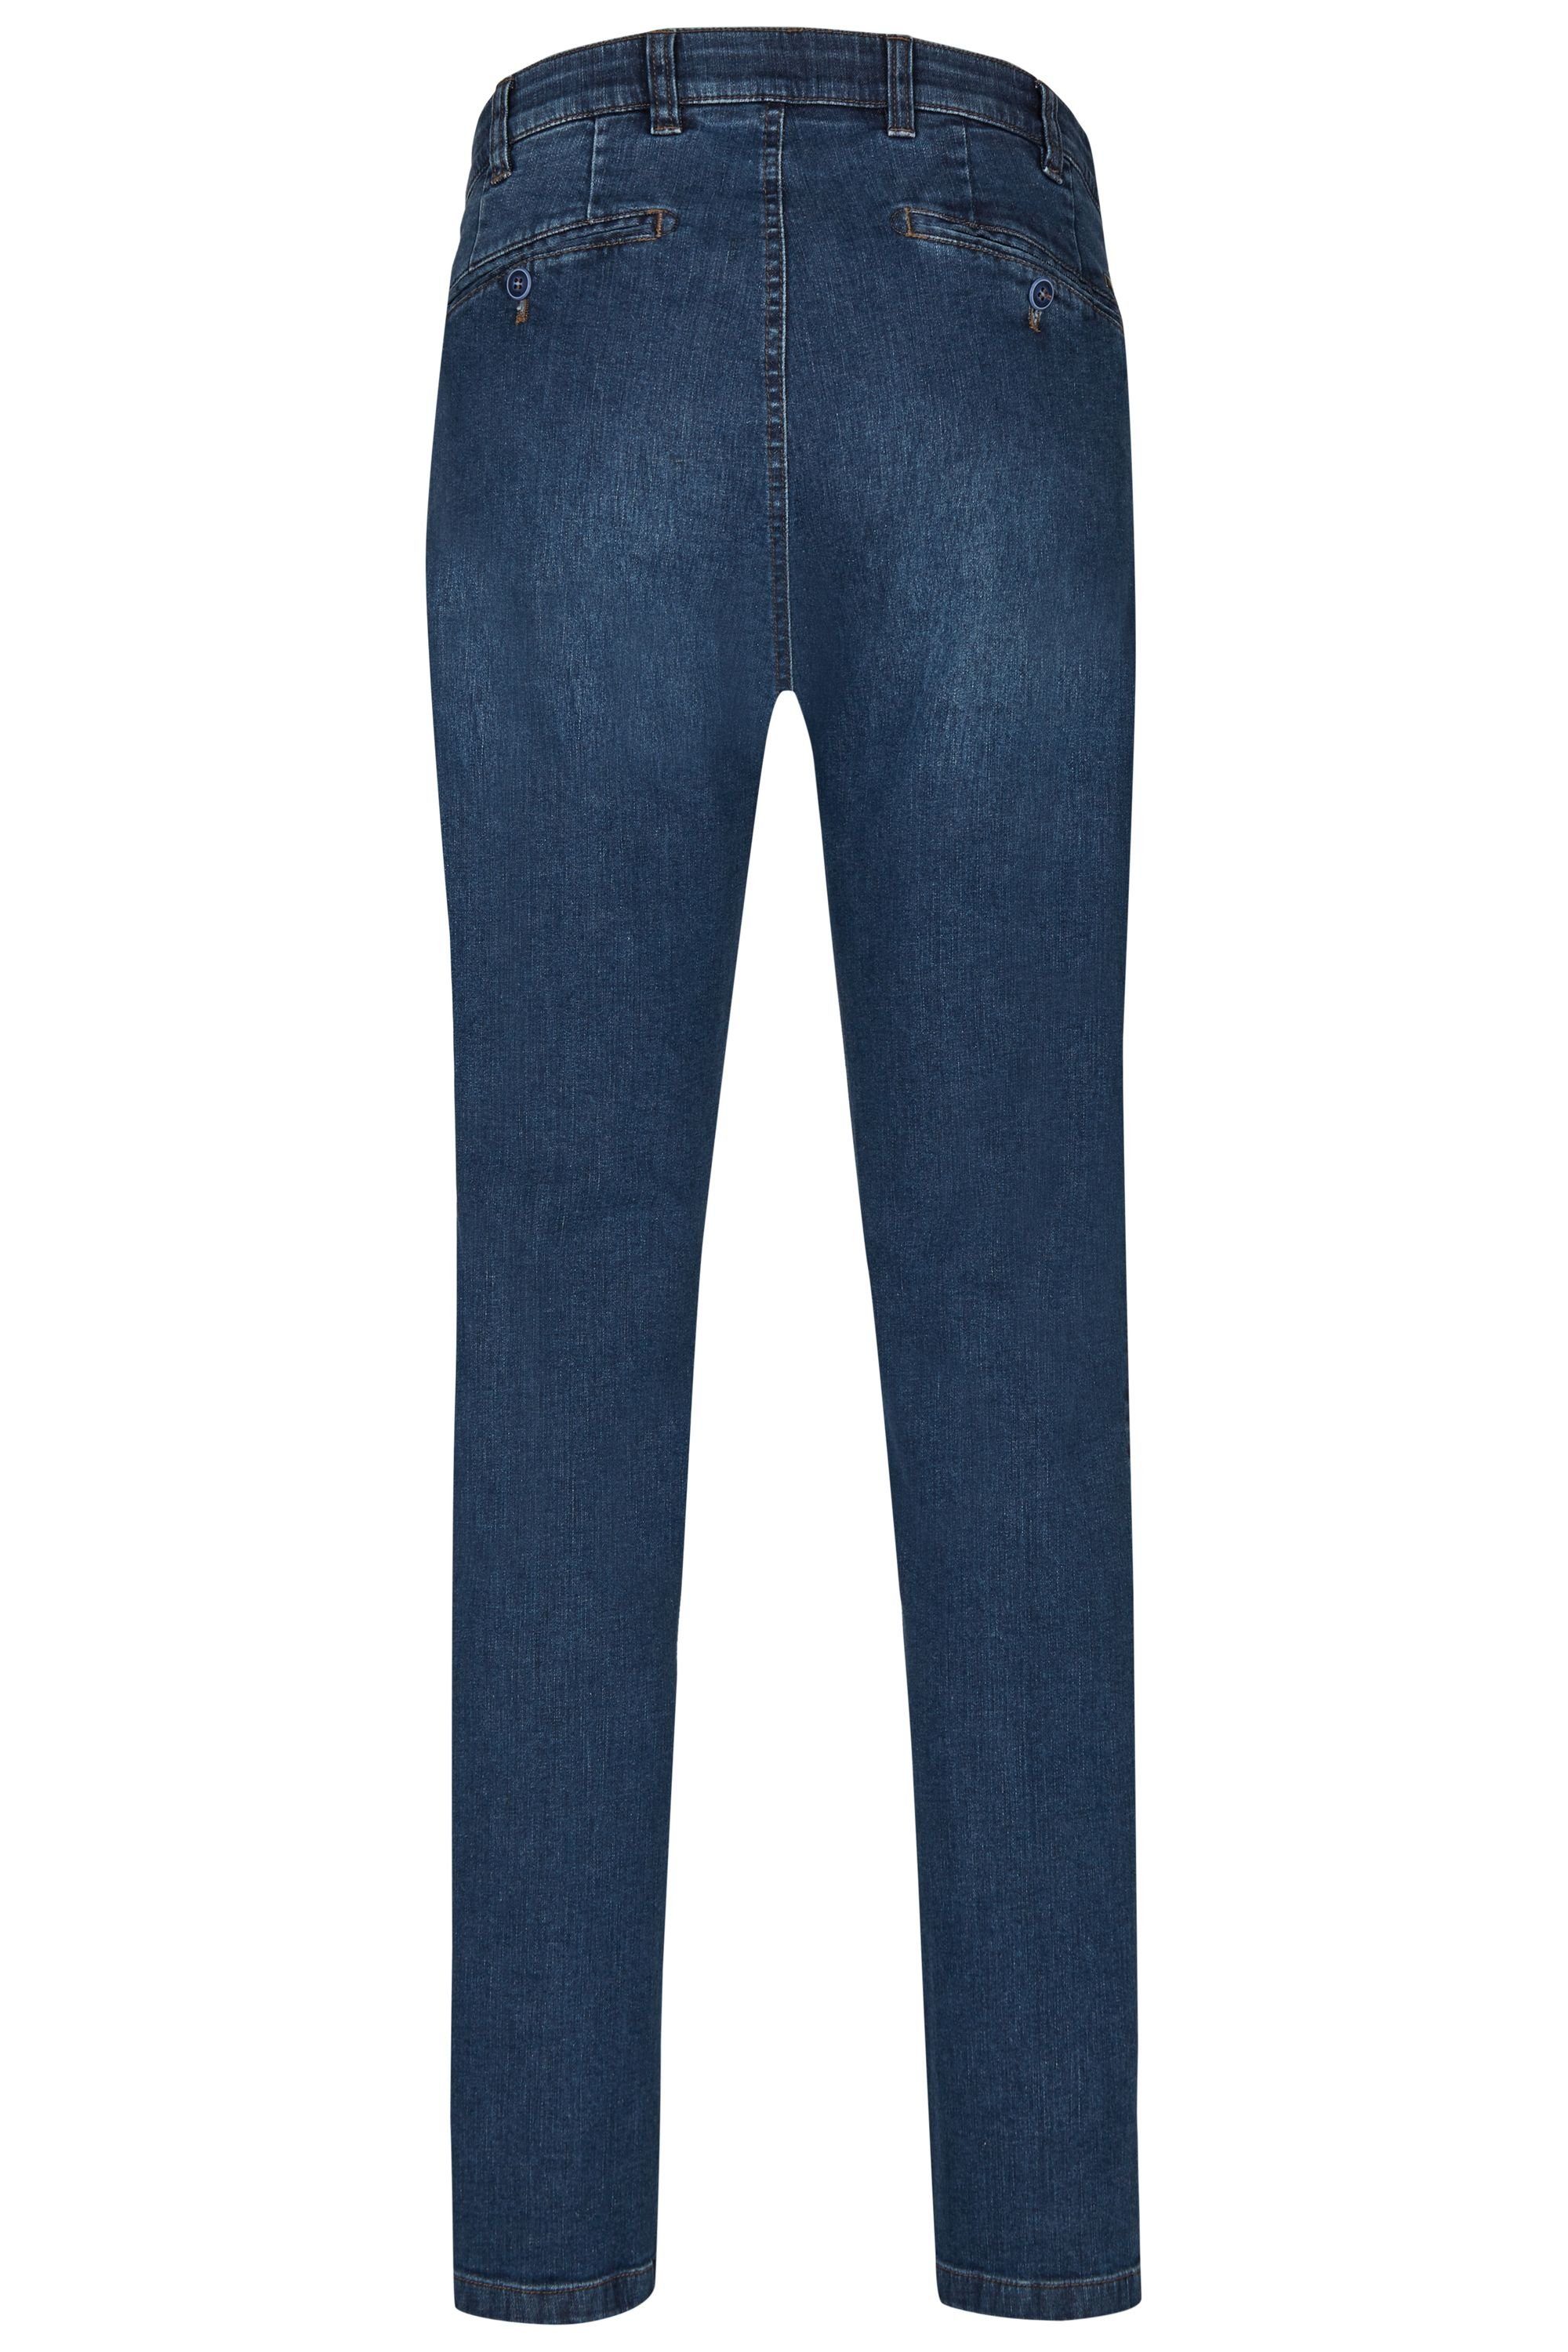 aubi: Bequeme Jeans aubi Perfect (45) stone Baumwolle High Flex soft aus Jeans Modell used 577 Stretch Hose Fit Herren